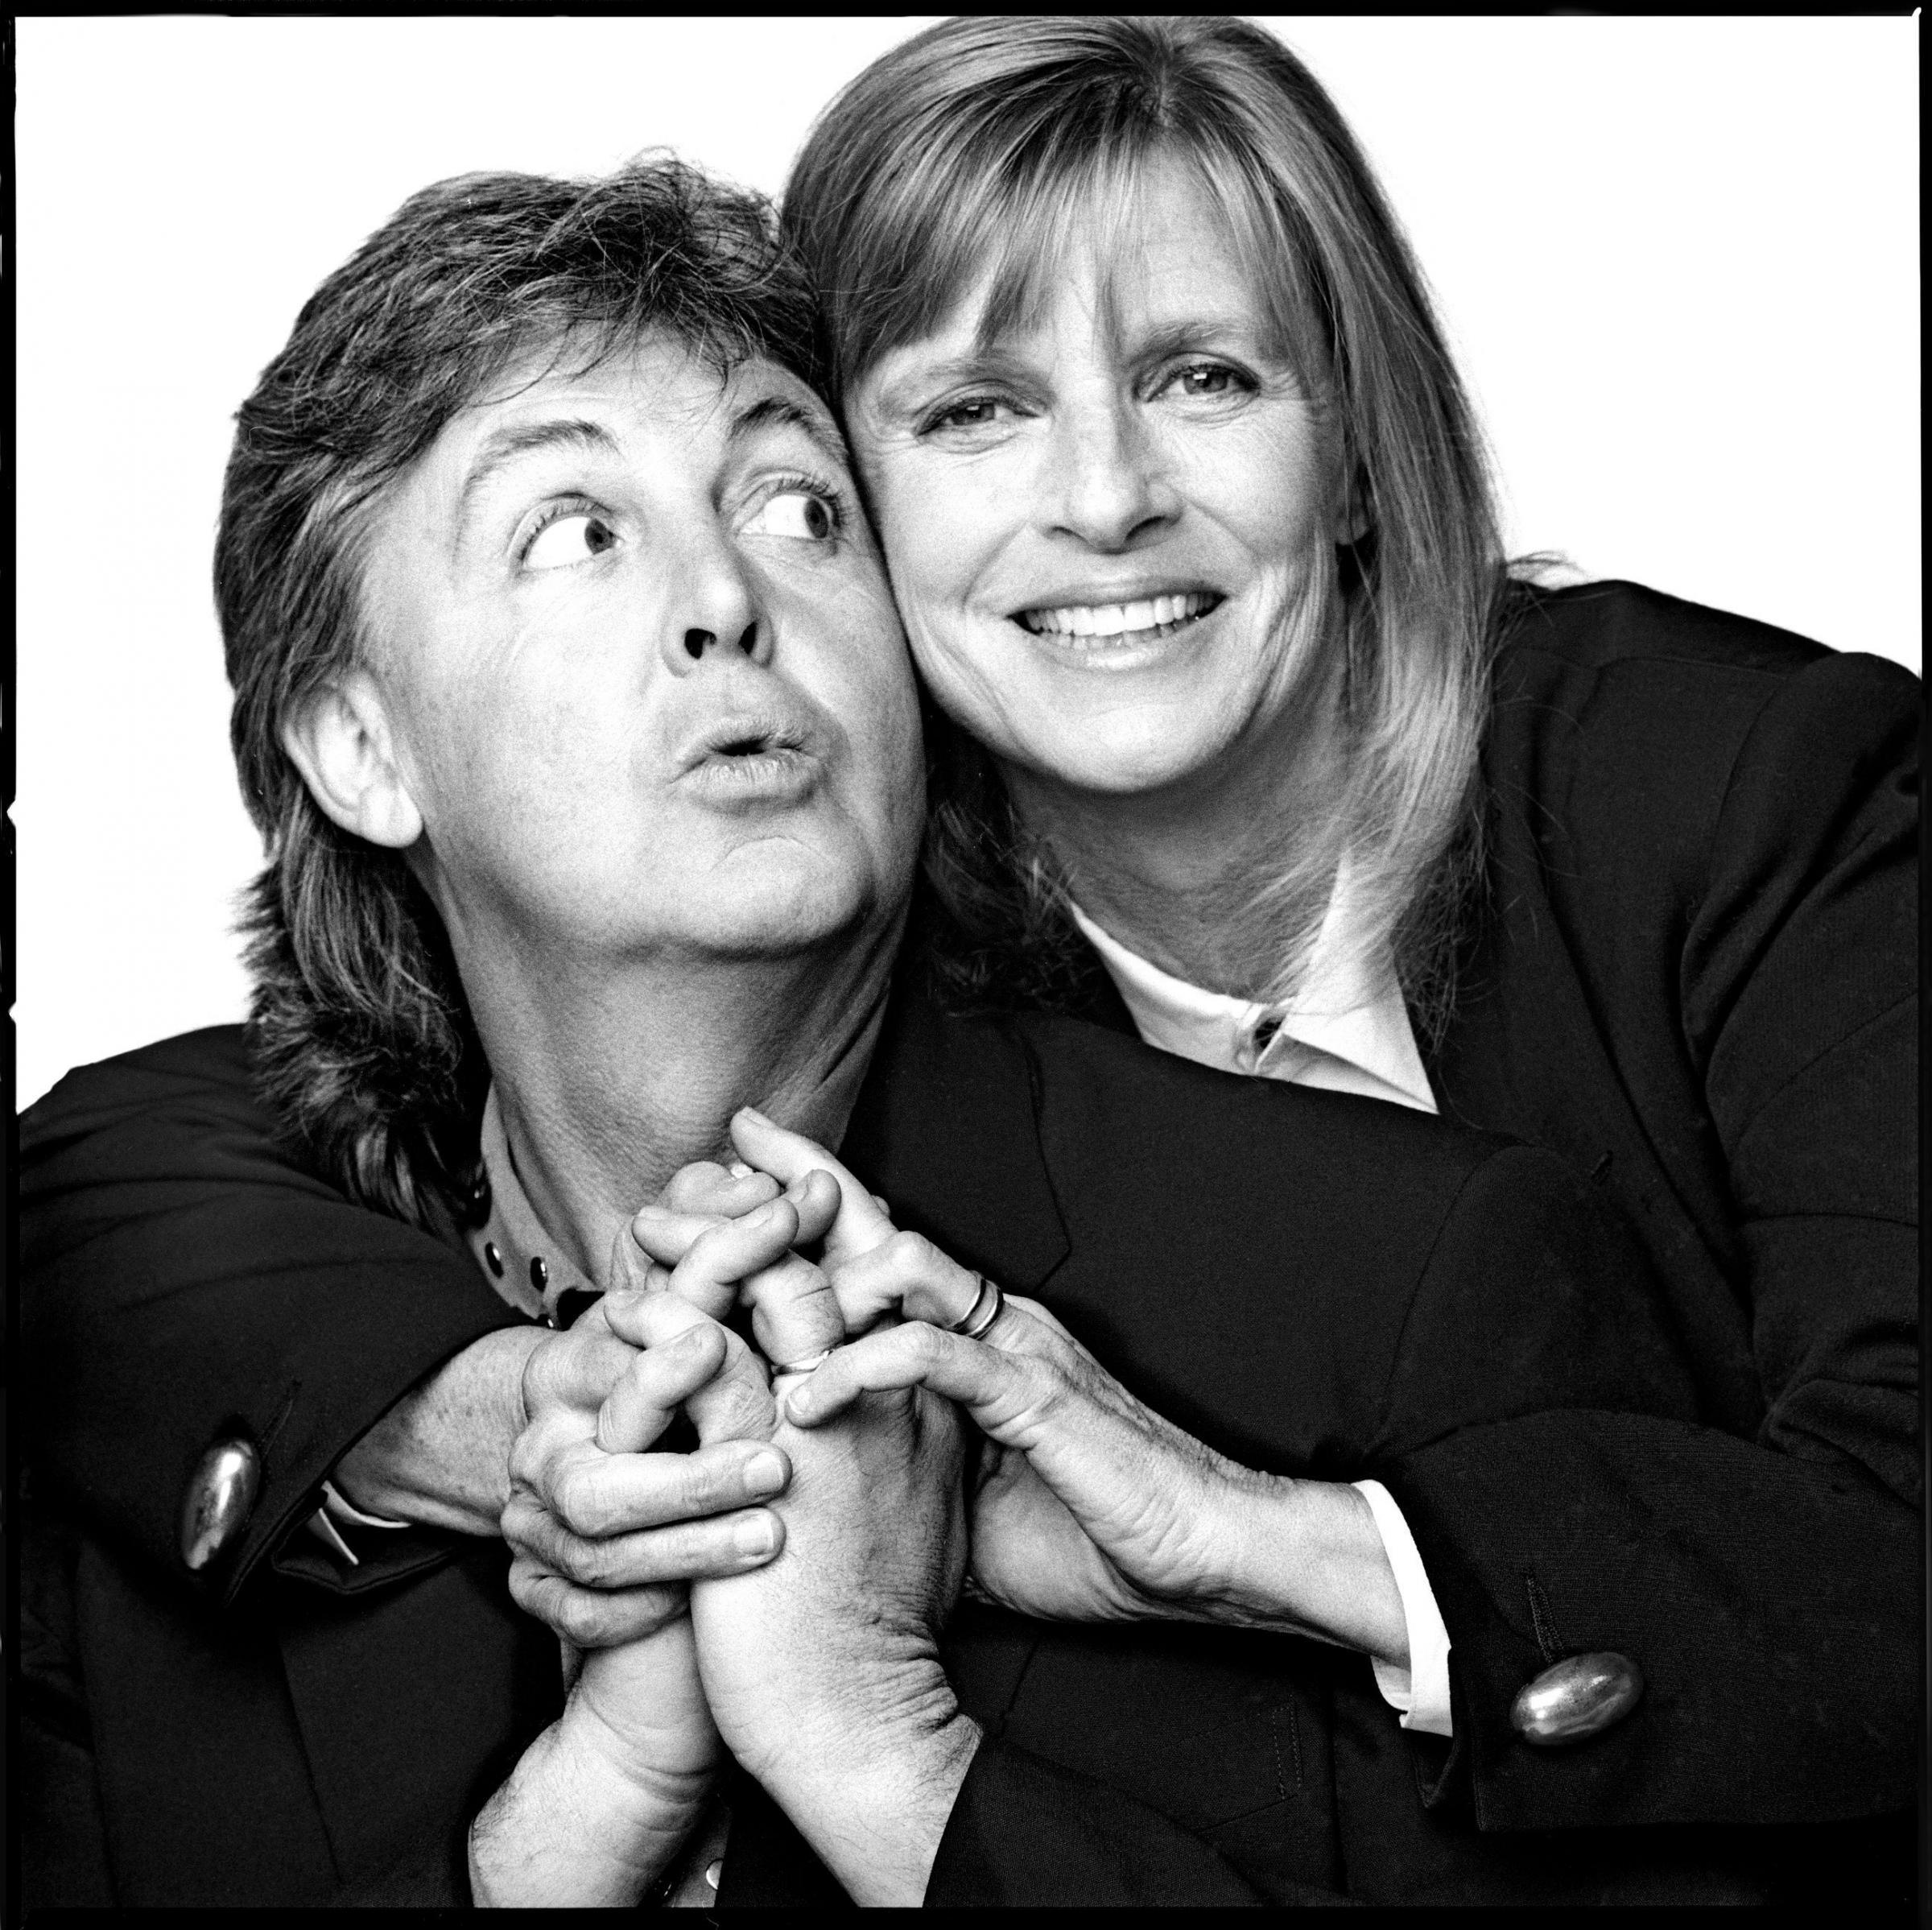 Le foto mai viste di Paul e Linda McCartney - Photogallery